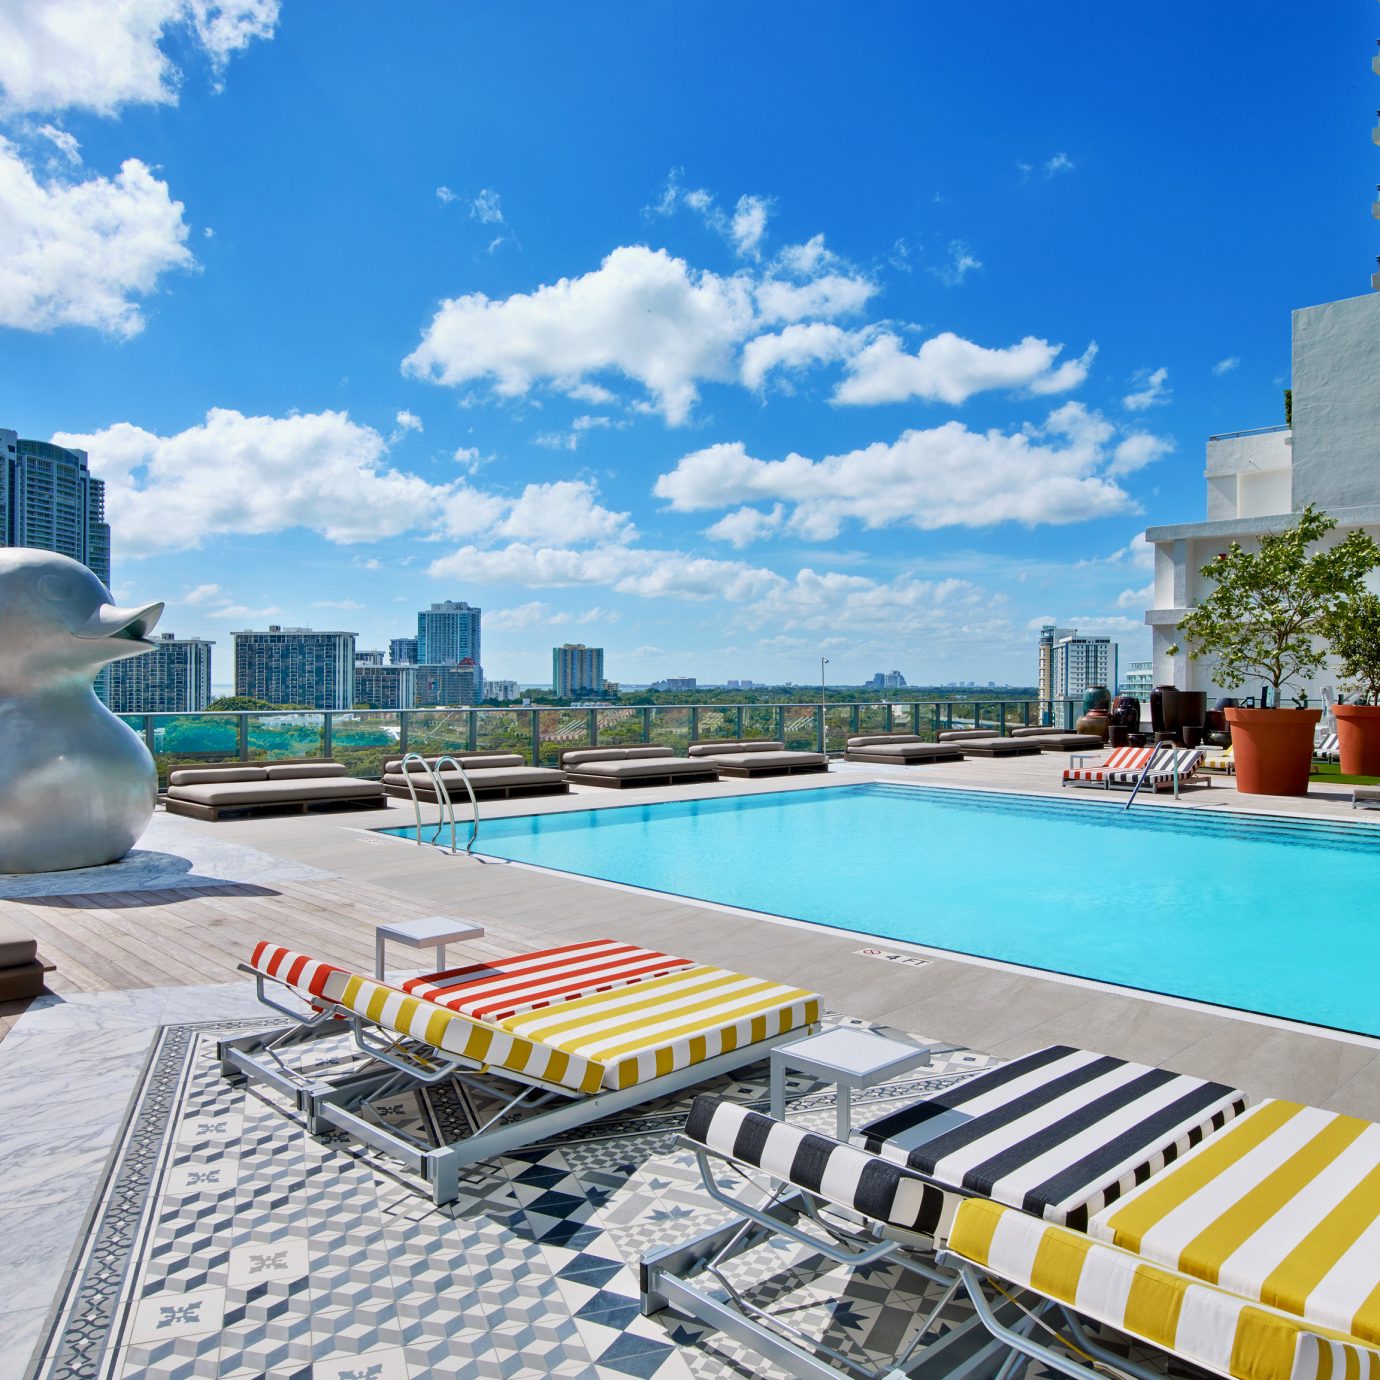 Hotels Trip Ideas Winter sky outdoor leisure swimming pool property condominium leisure centre Resort plaza Water park estate